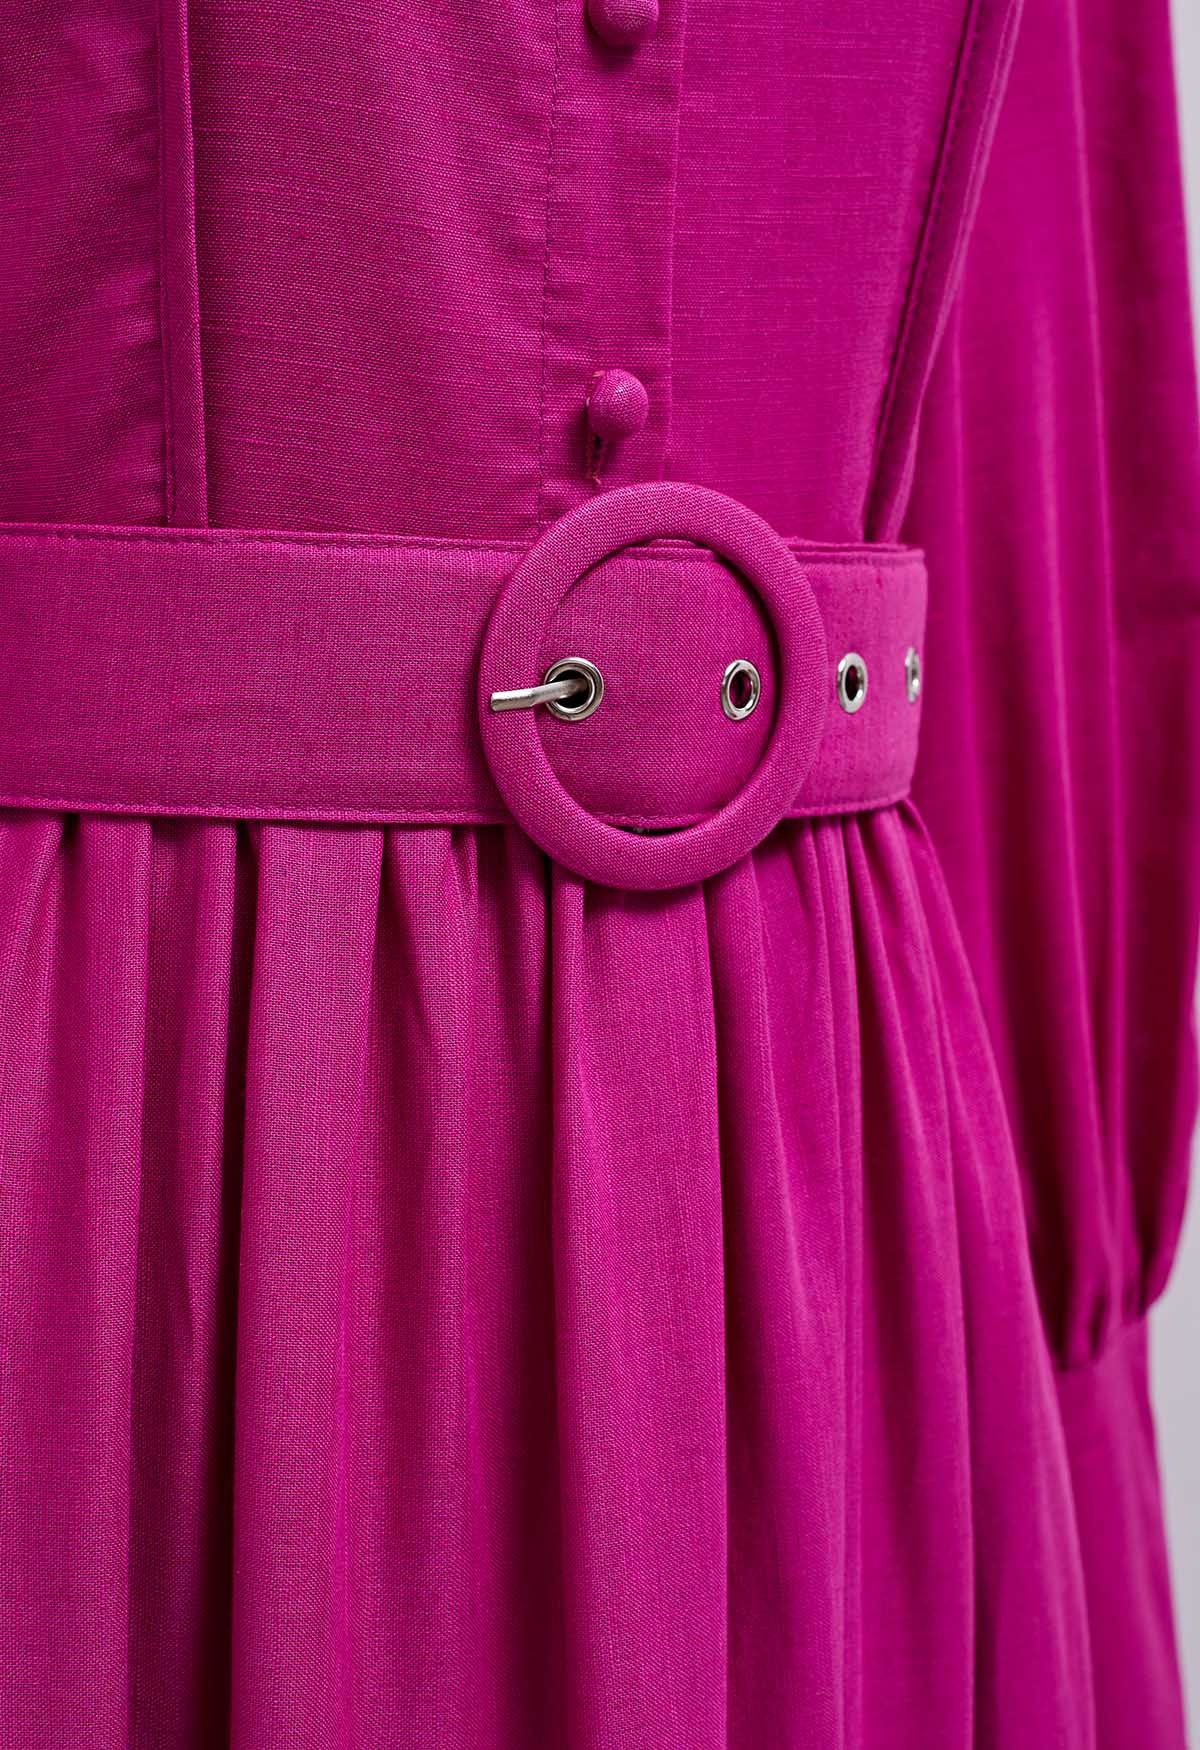 Lantern Sleeve Button Down Linen-Blend Midi Dress in Magenta